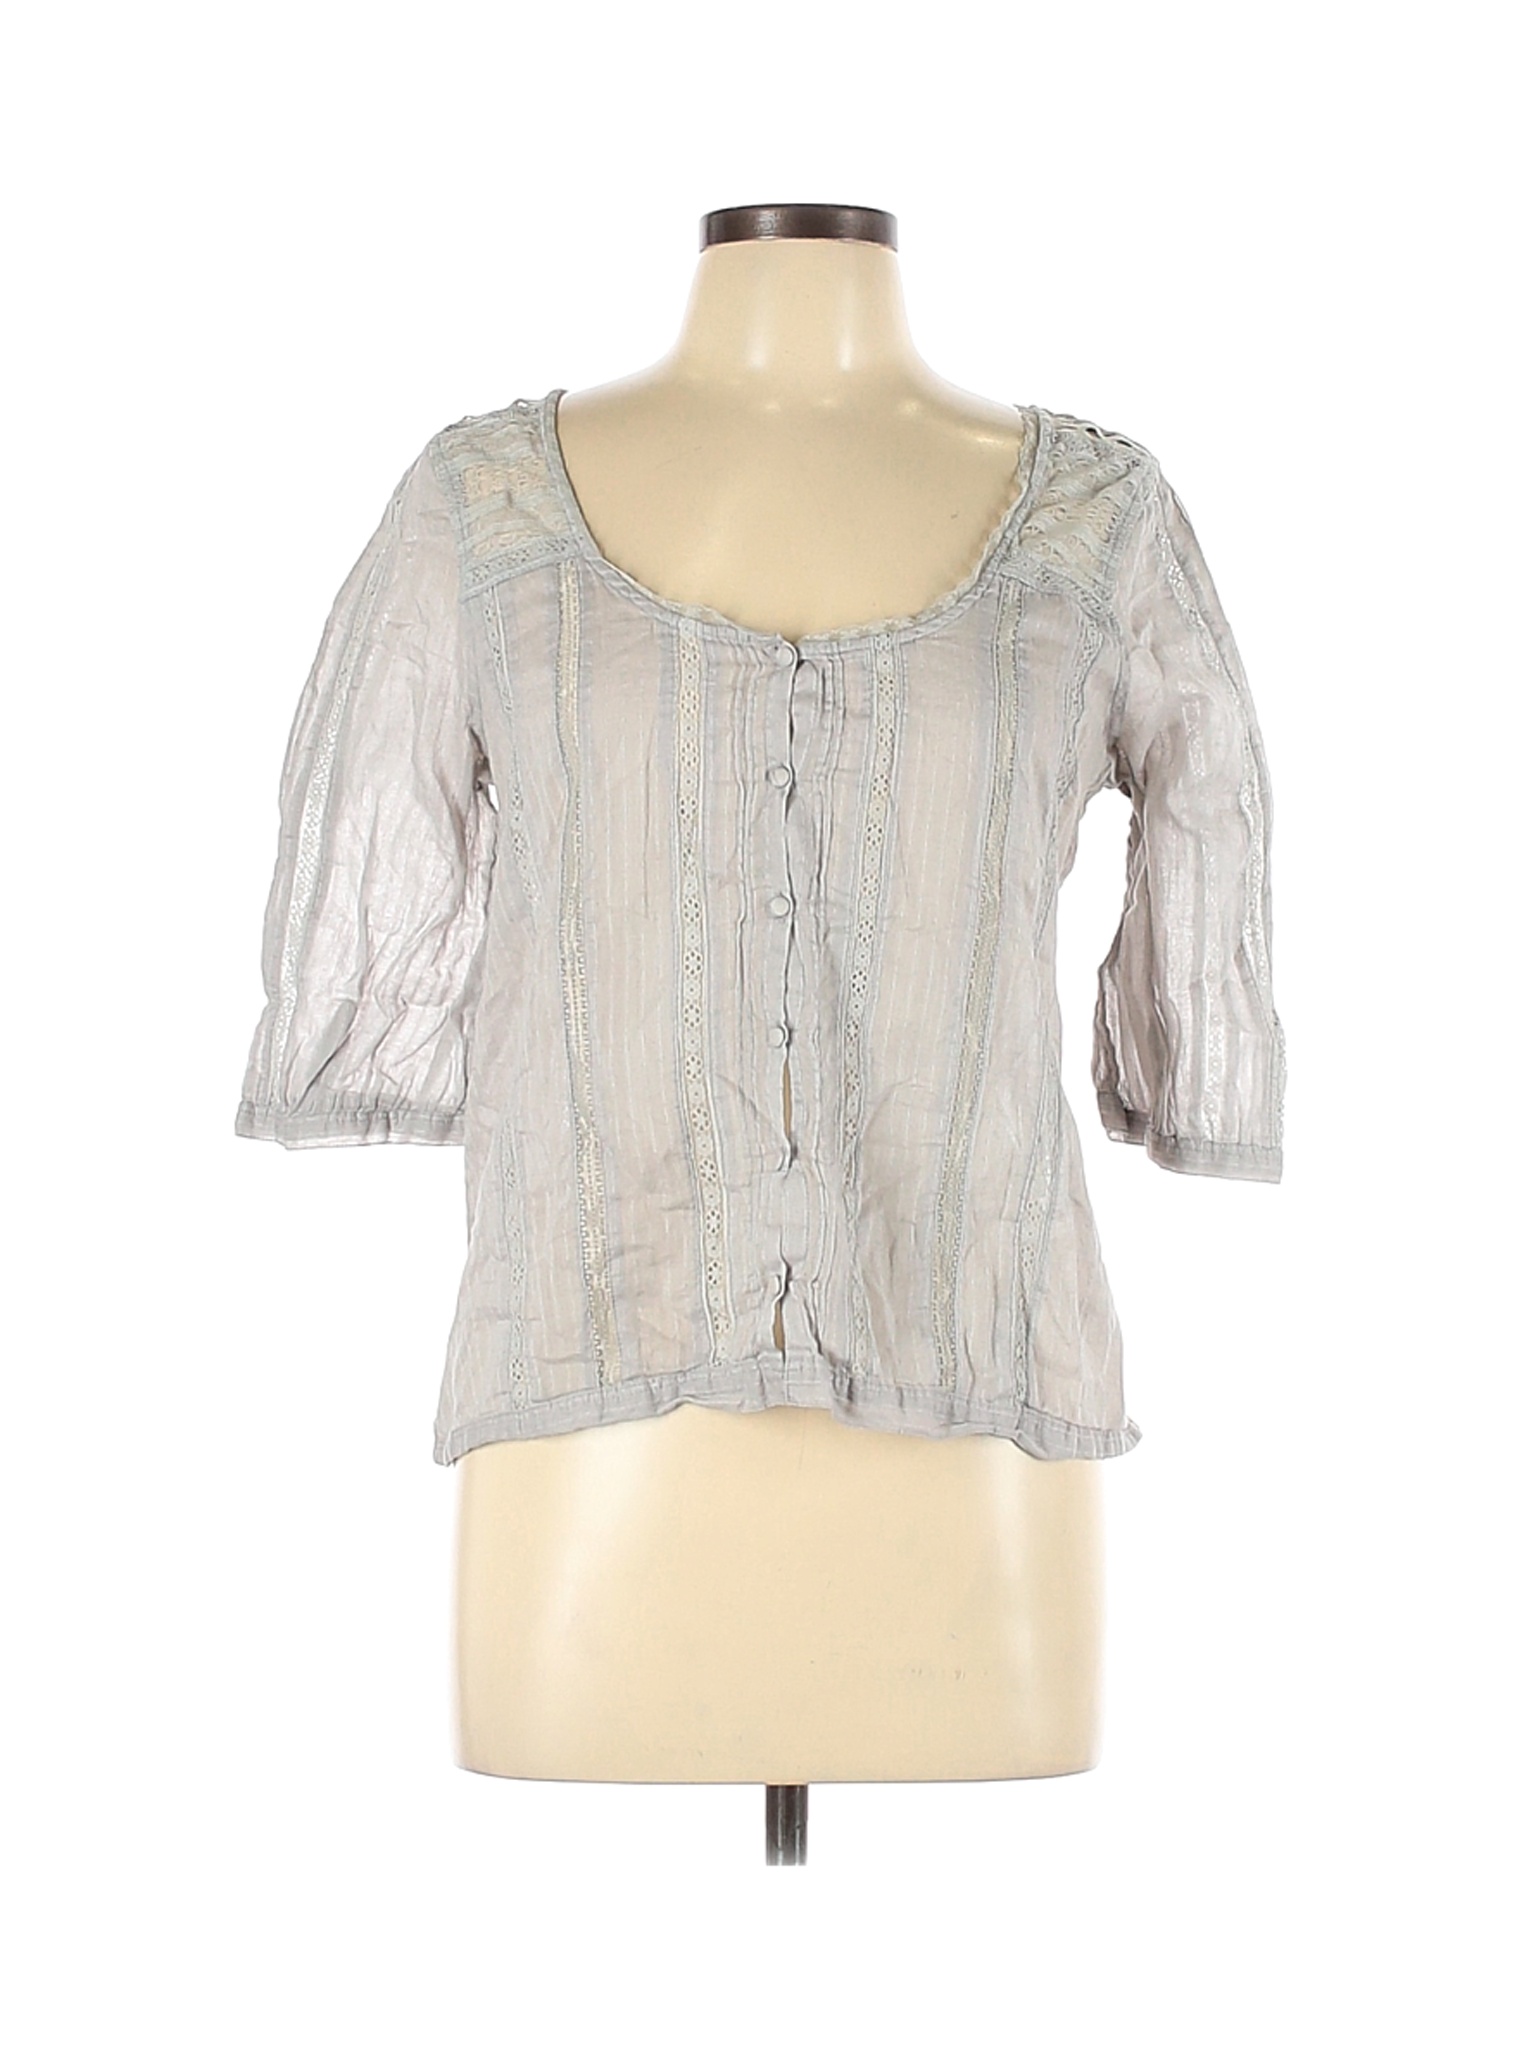 Abercrombie & Fitch Women Gray 3/4 Sleeve Blouse L | eBay